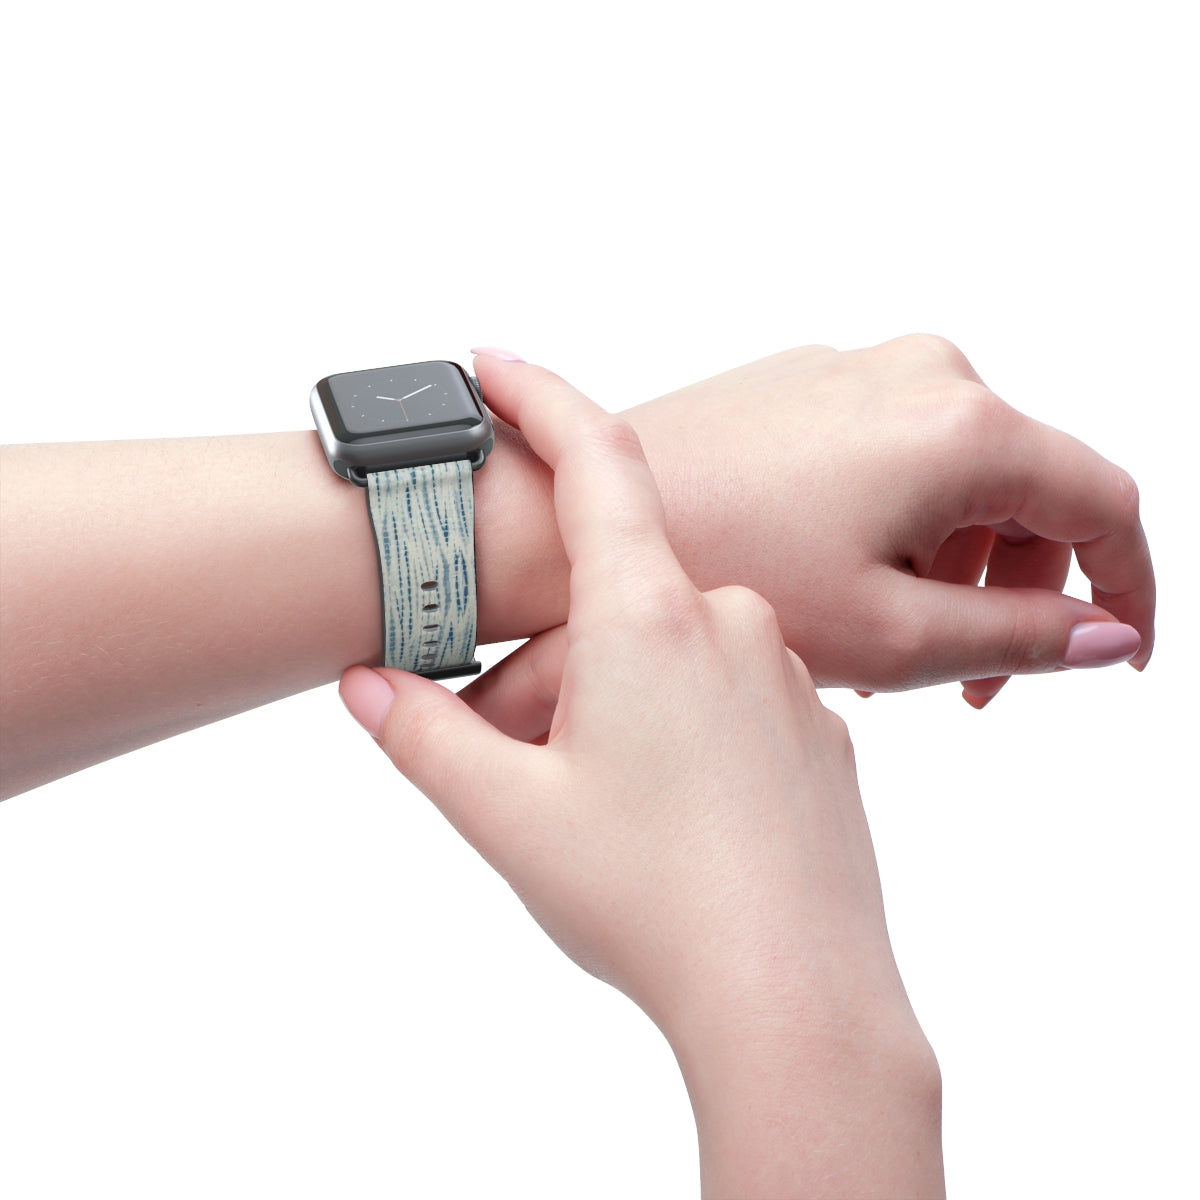 Shibori Print Apple Watch Band